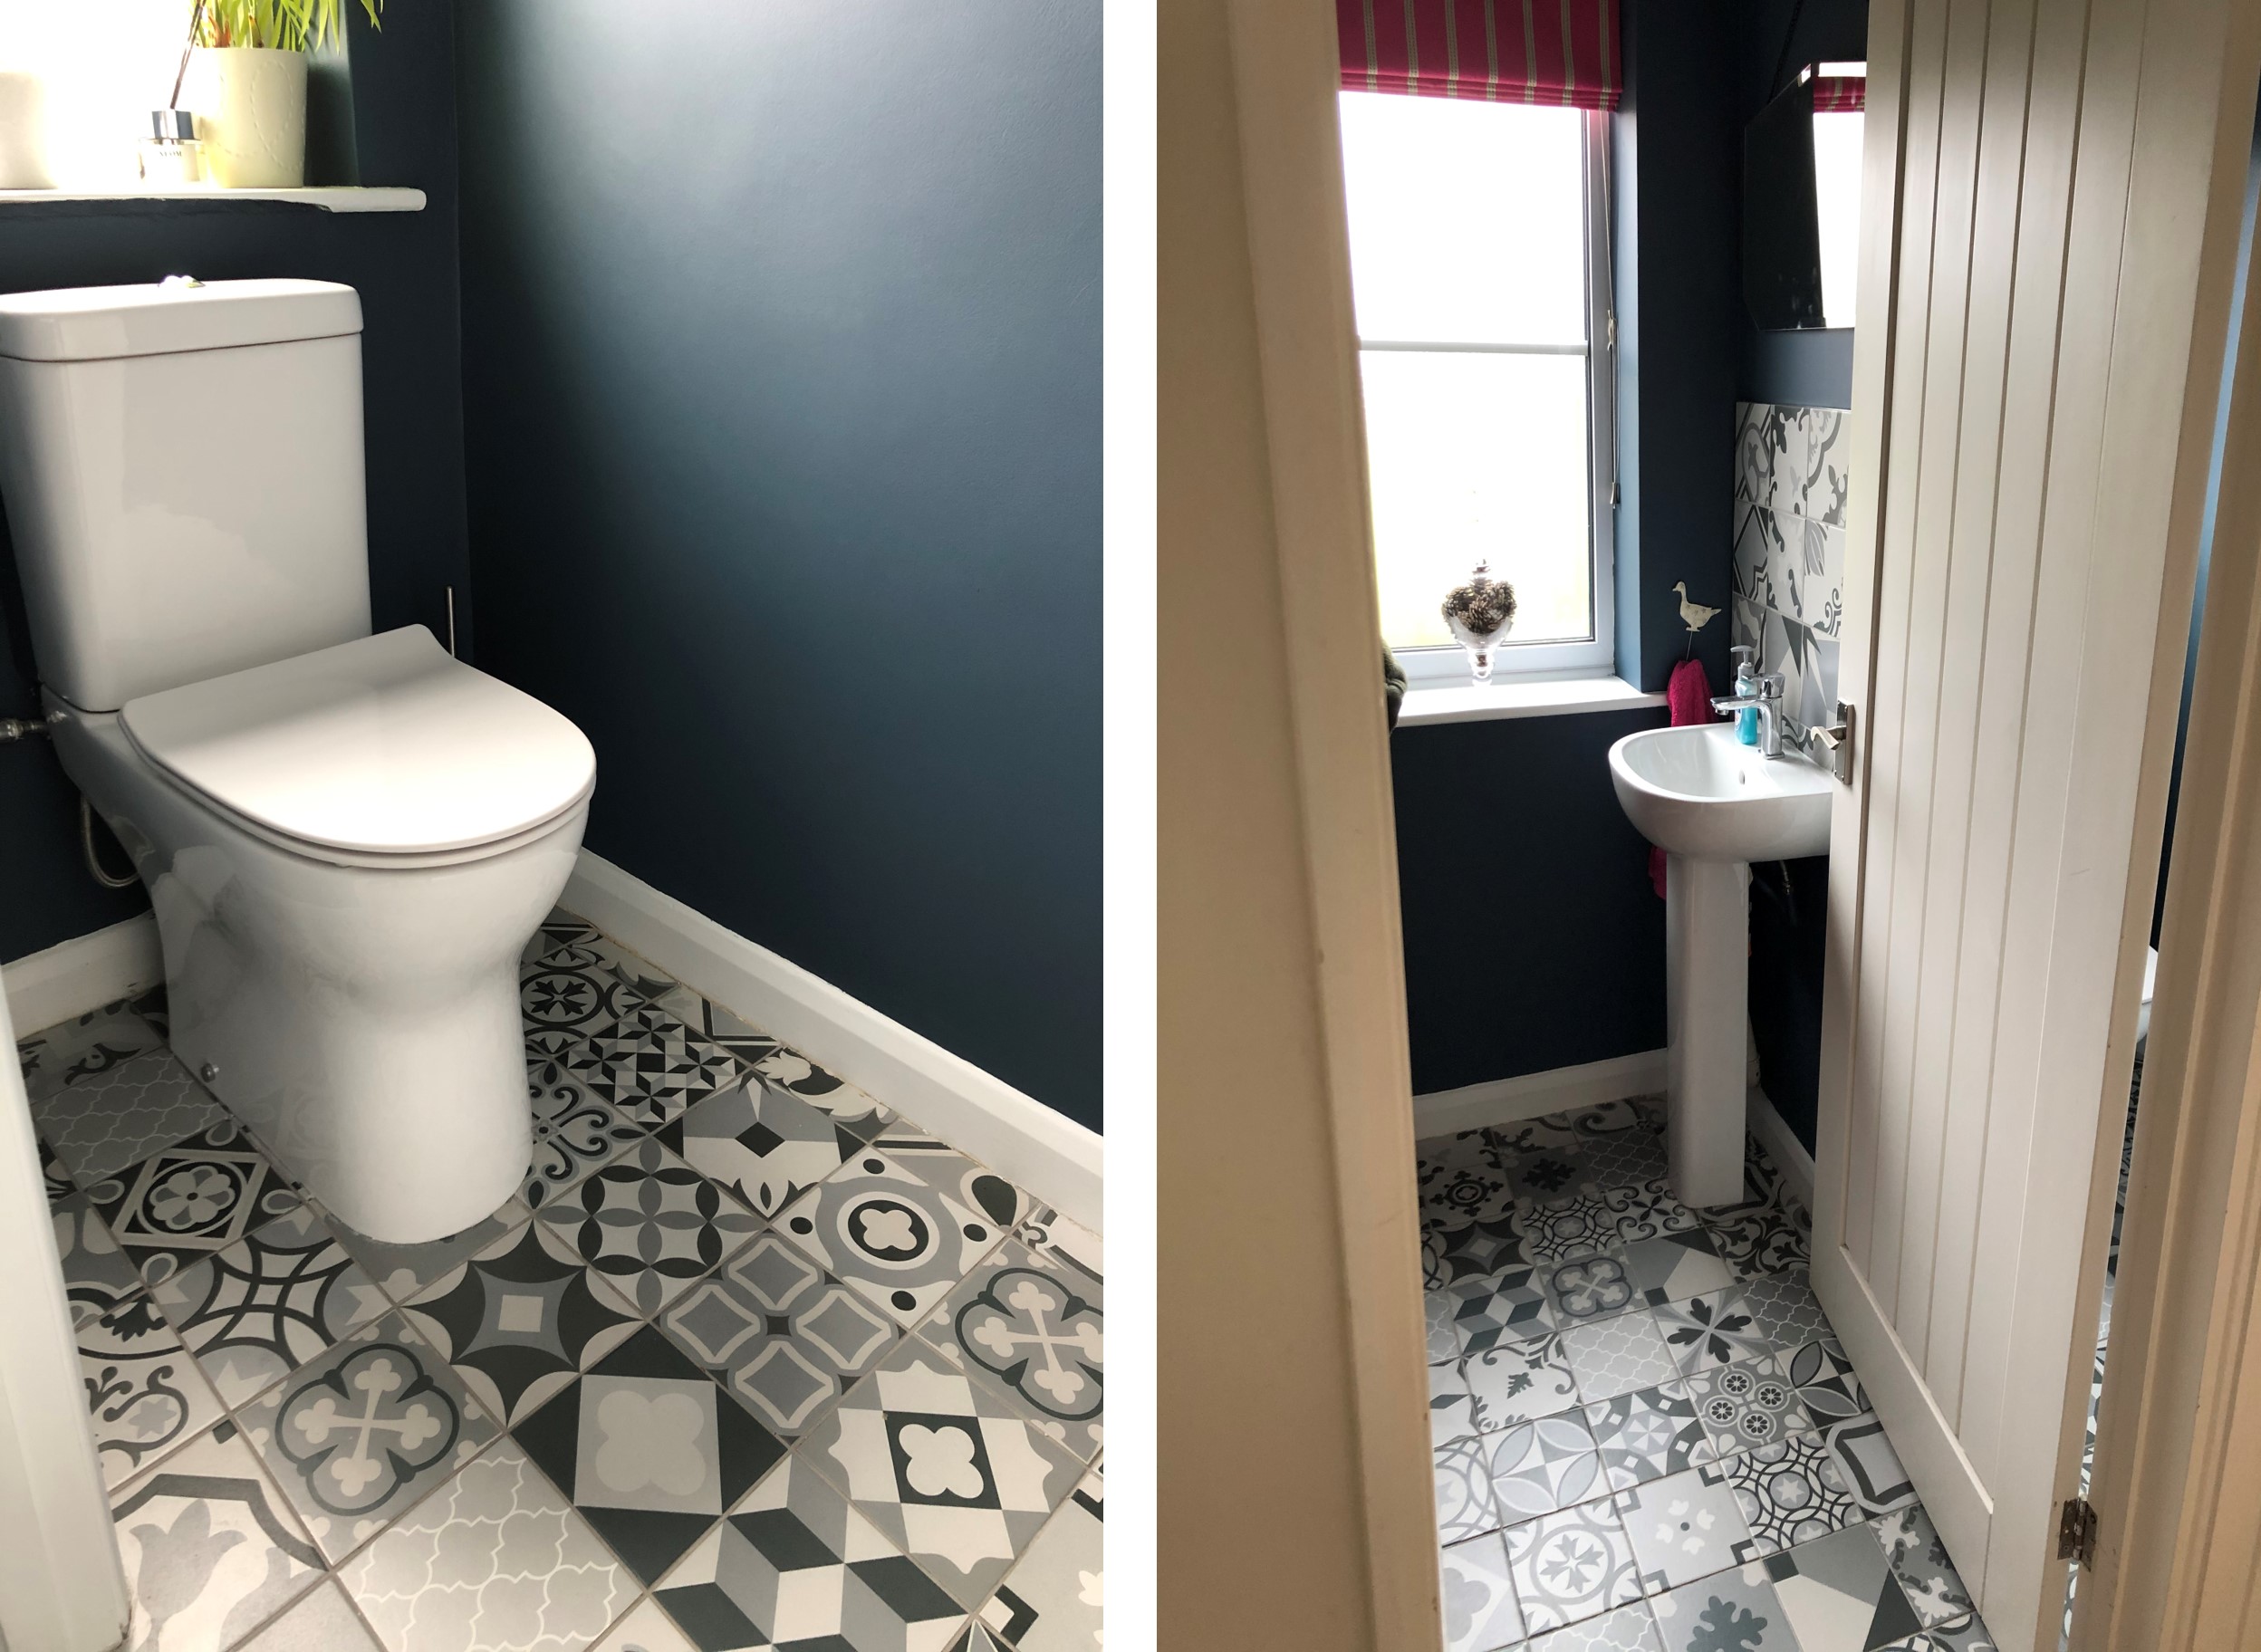 tiling|grey|white|handyman|floor|toilet|wall|toilet|sink|window